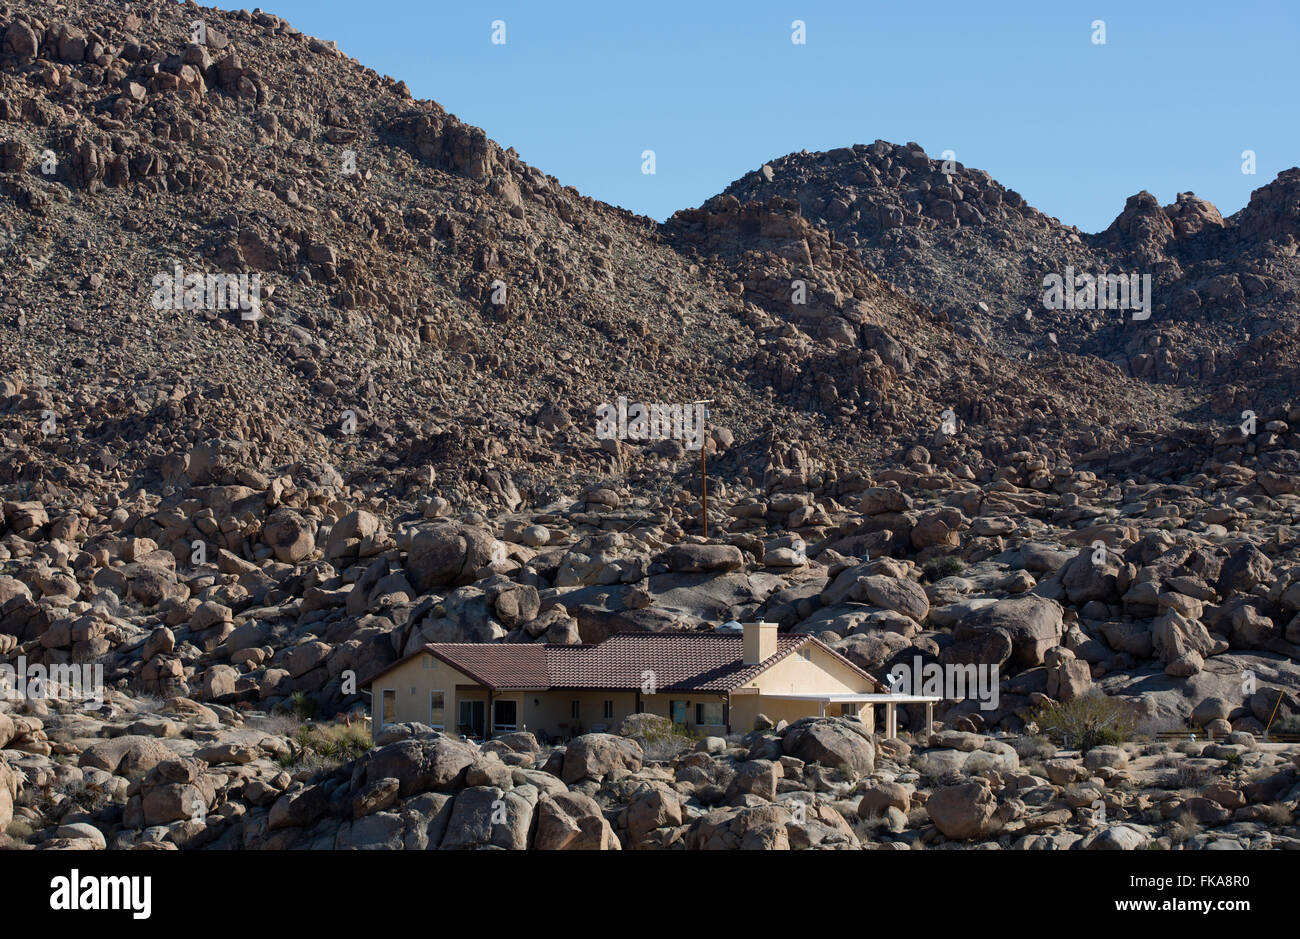 House in desert environment, Twentynine Palms, California, USA Stock Photo